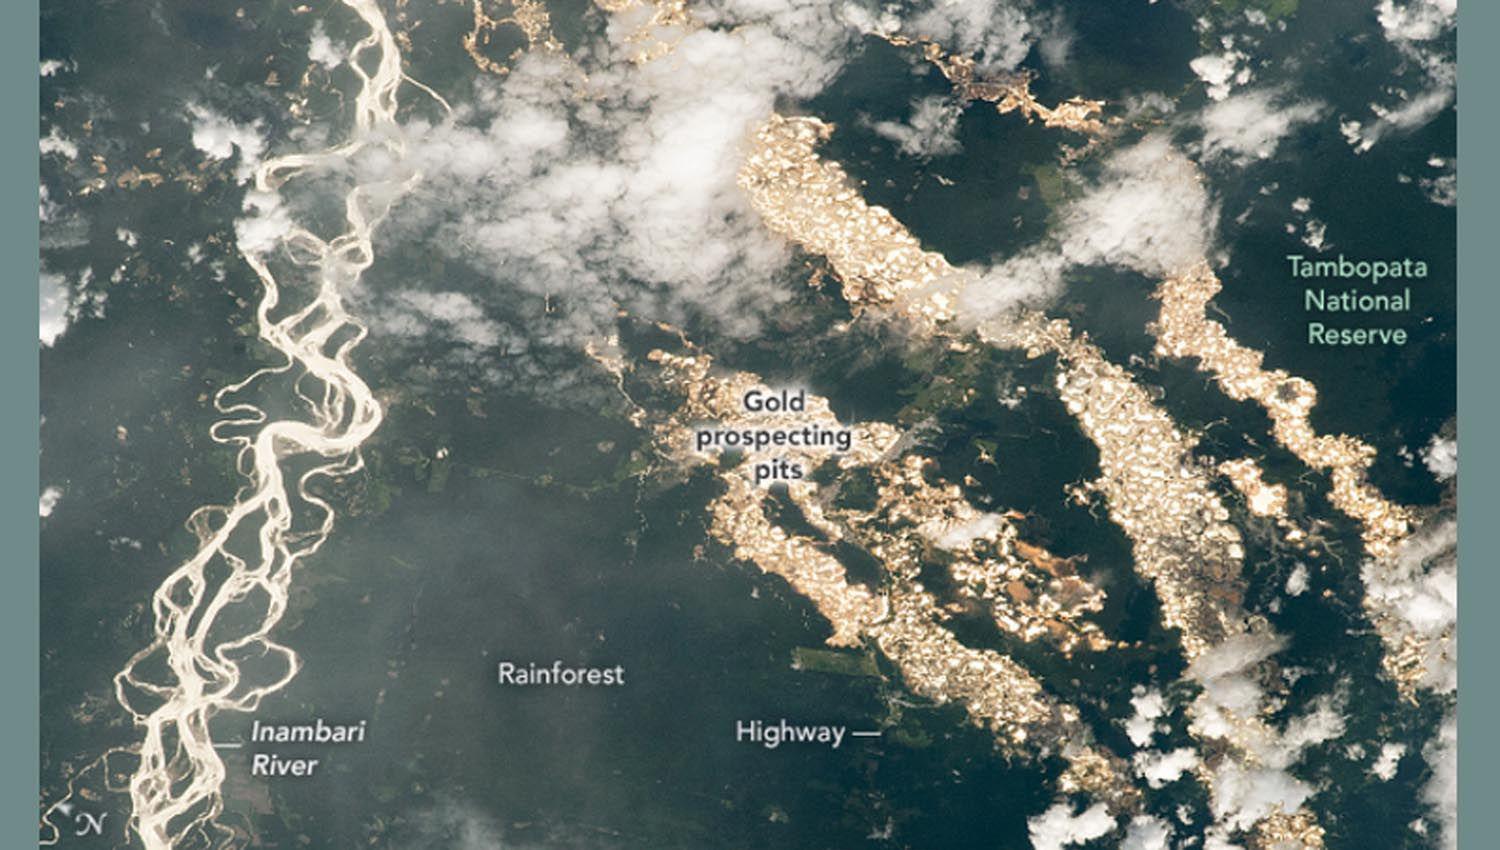 Riacuteos de oro en el Peruacute- La NASA reveloacute imaacutegenes impactantes